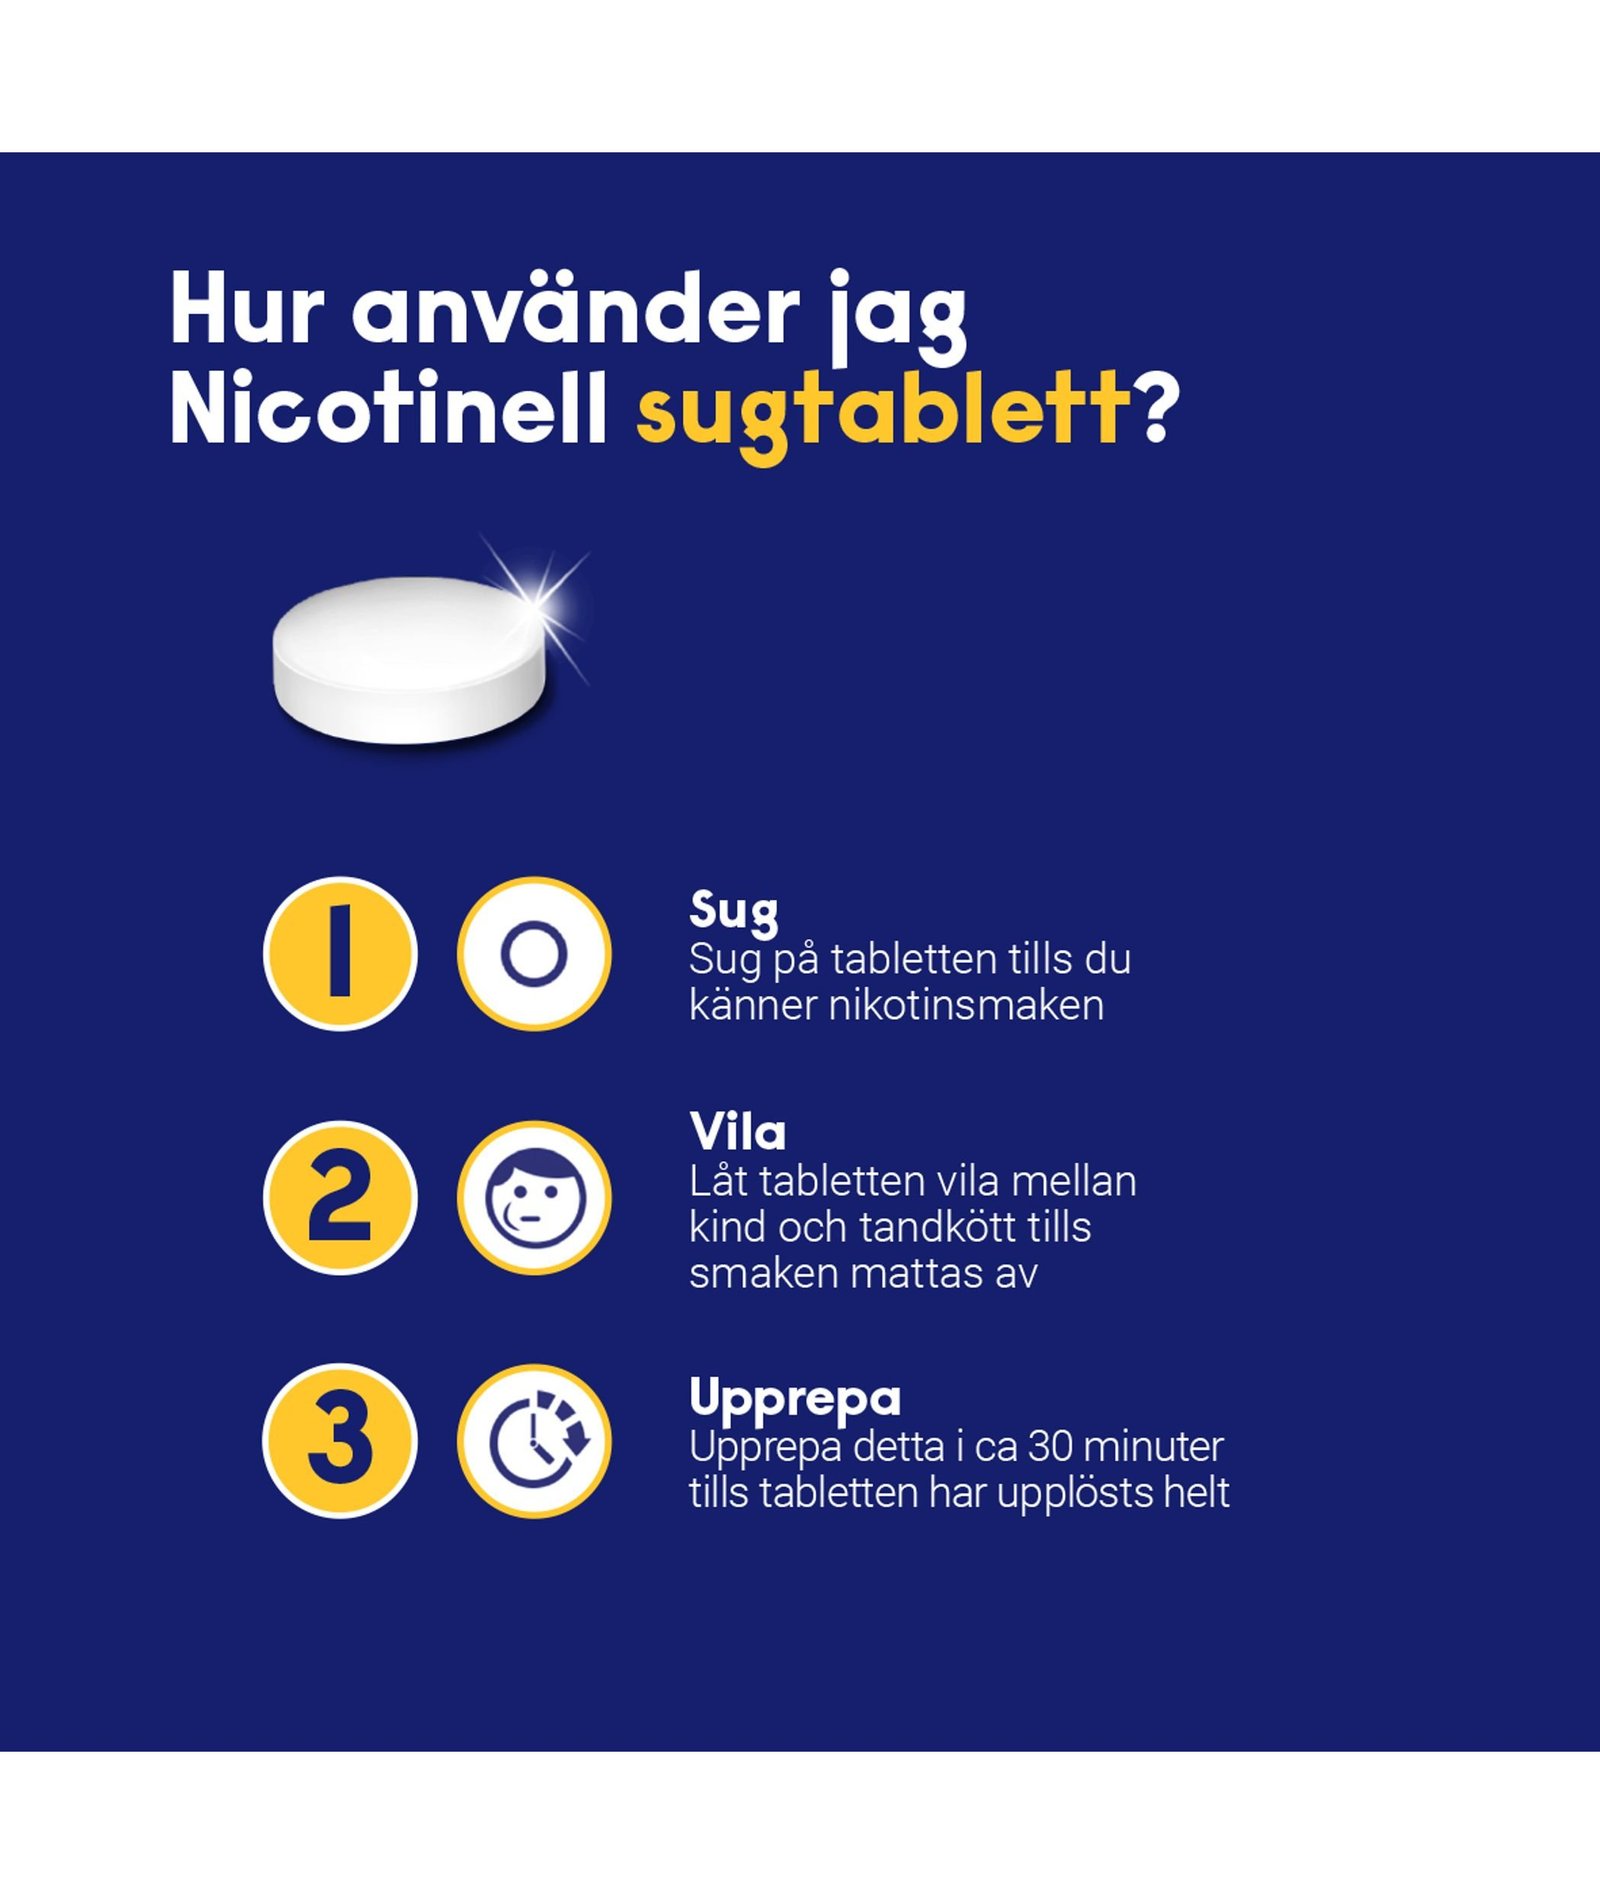 Nicotinell Mint 2 mg Nikotin Komprimerade Sugtabletter 96 st